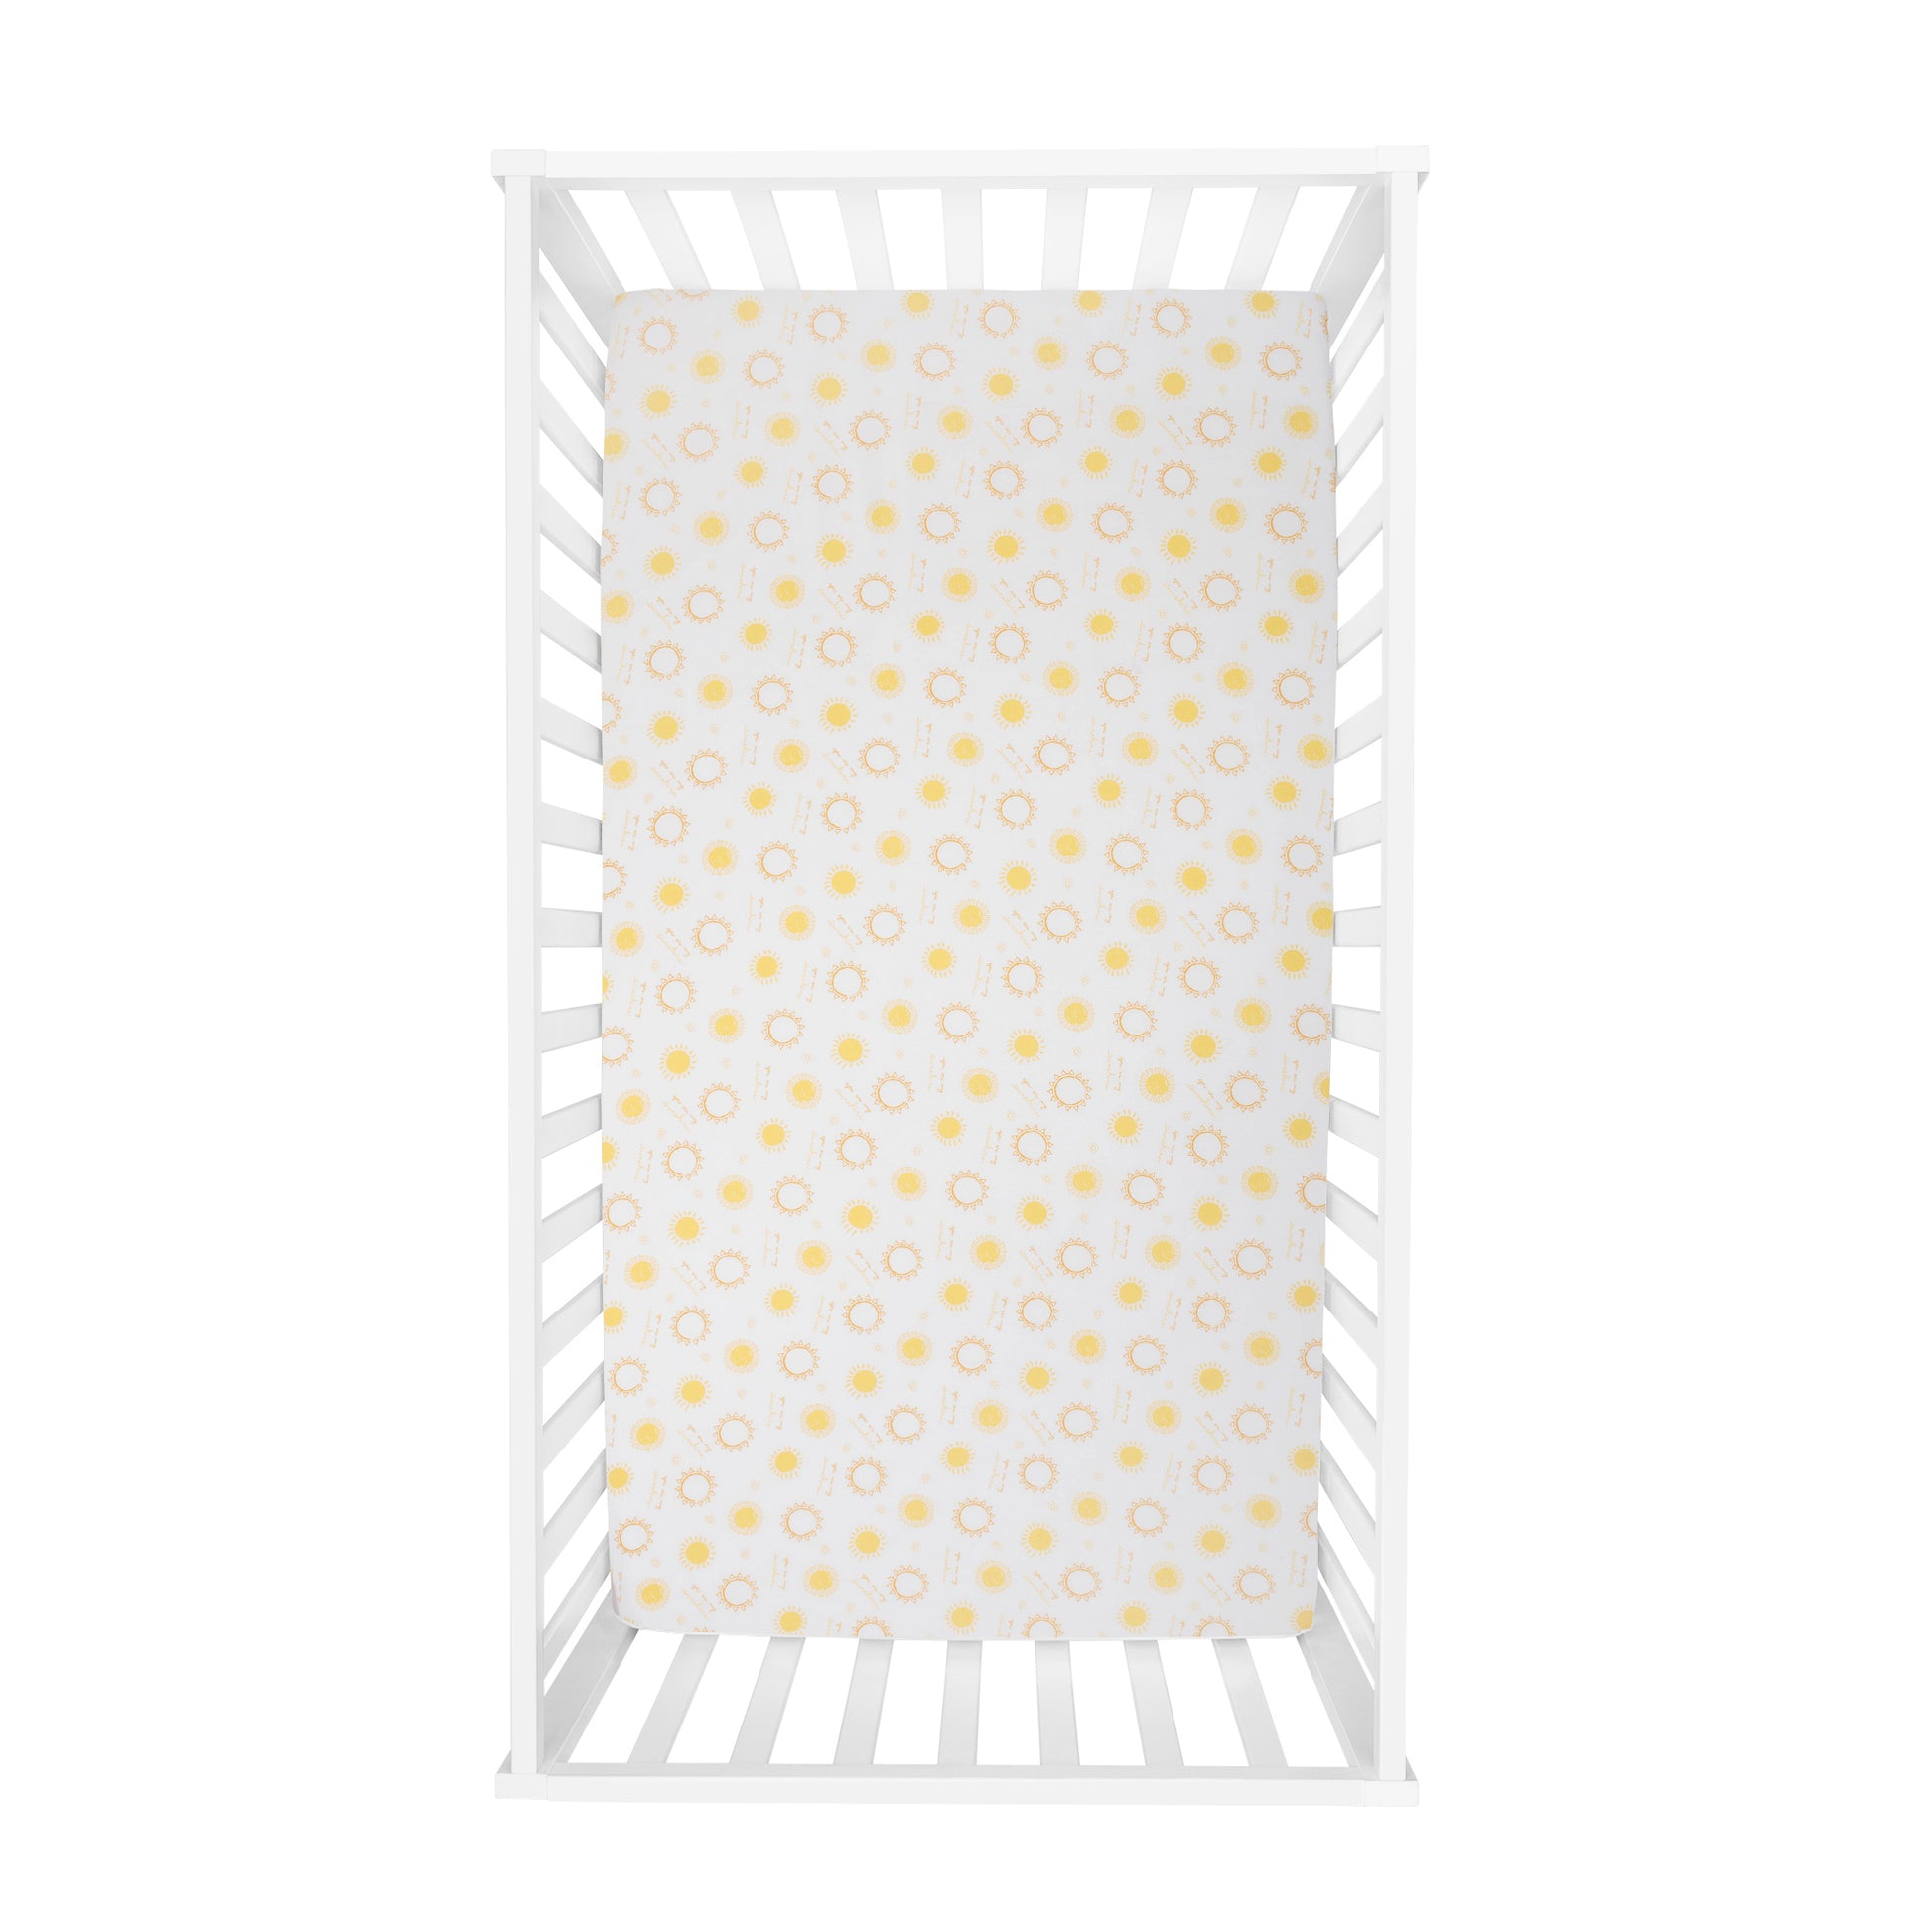 Butterflies & Sunshine 2-Pack Microfiber Fitted Crib Sheet Set - overhead view